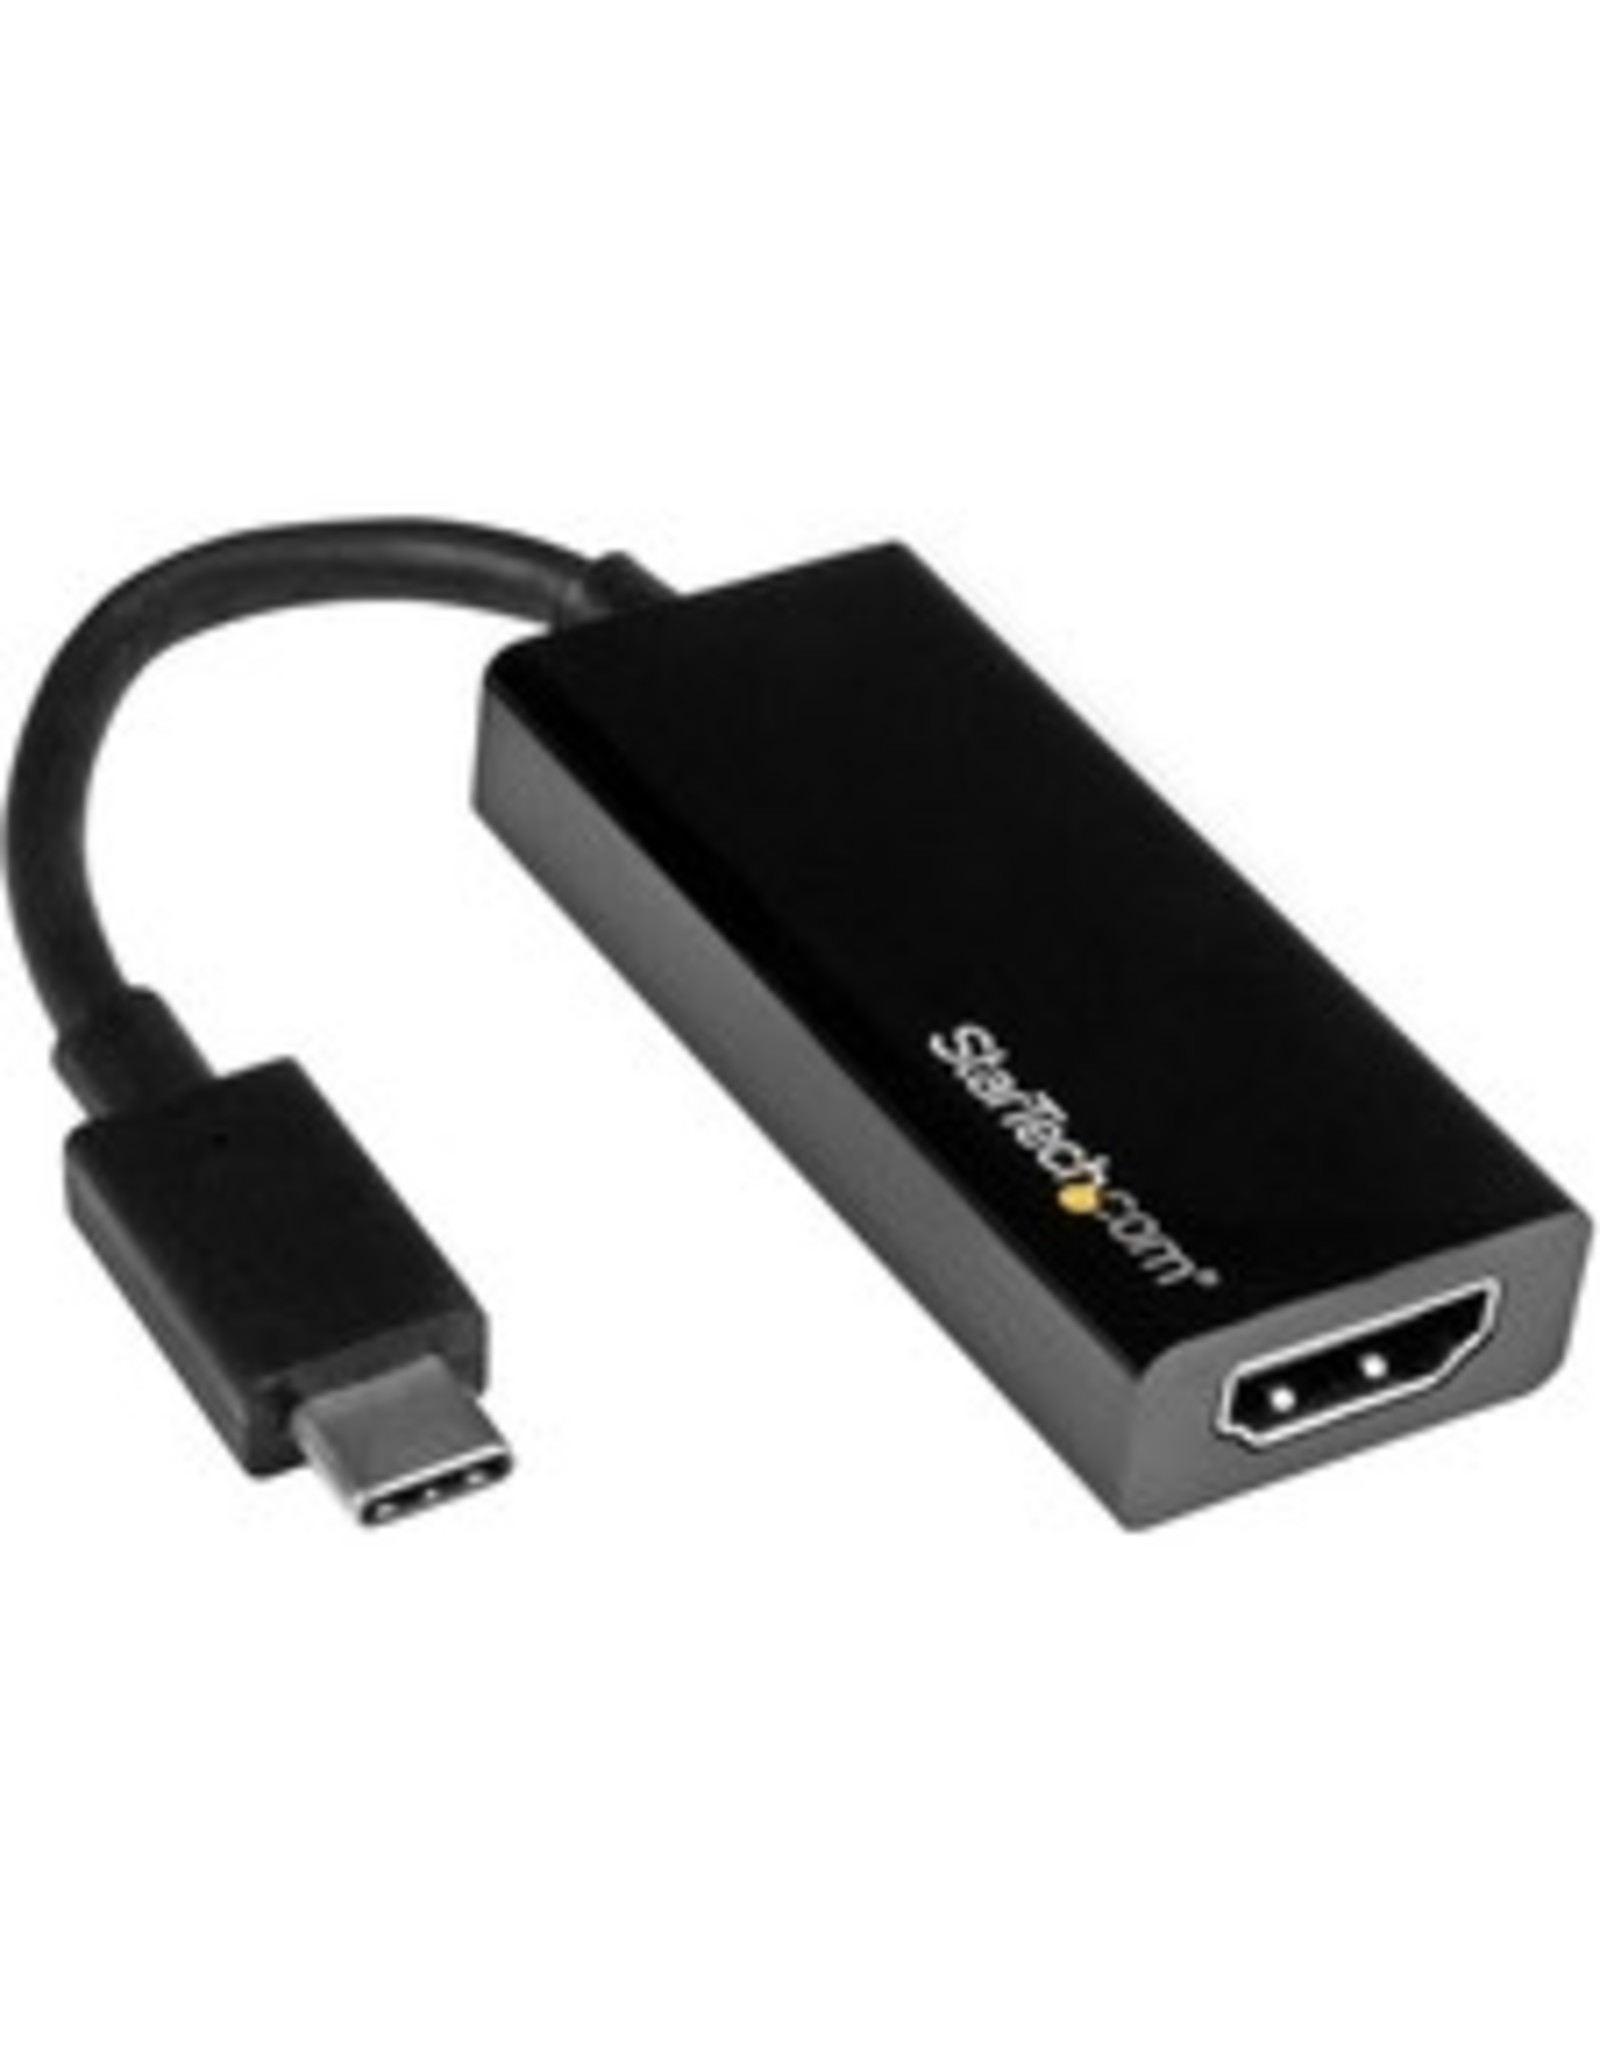 USB-C TO HDMI ADAPTER,BLACK